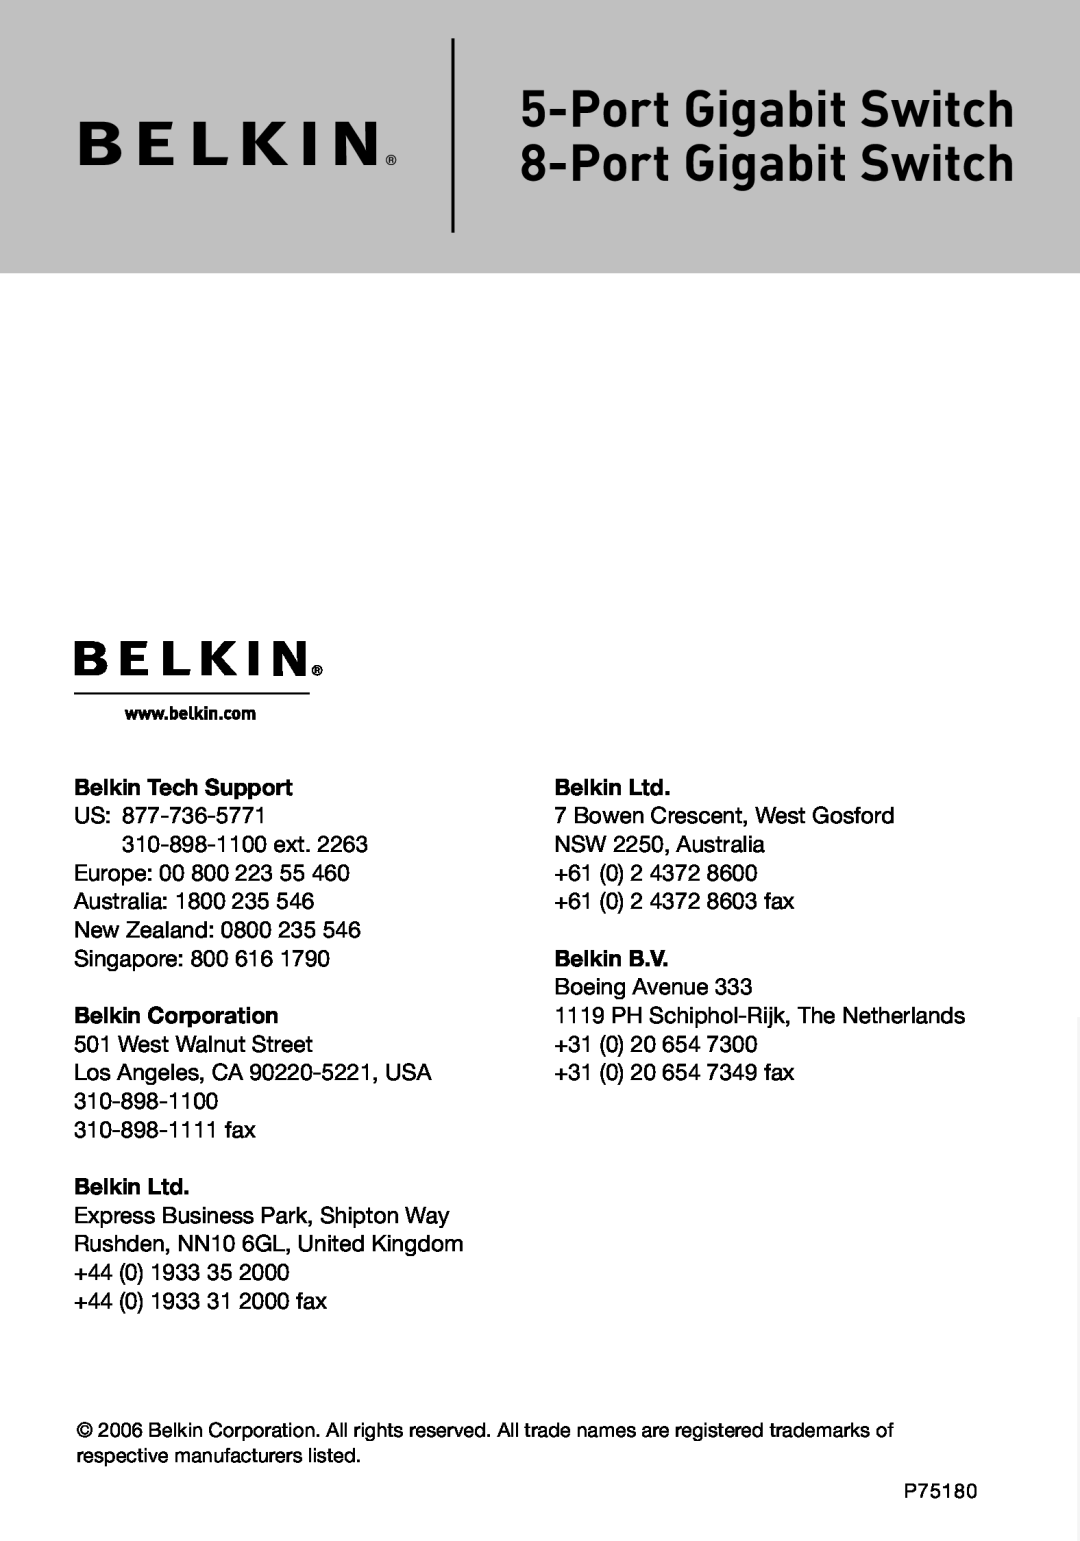 Belkin F5D5141-5 manual Port Gigabit Switch 8-Port Gigabit Switch, Belkin Tech Support, Belkin B.V, Belkin Corporation 